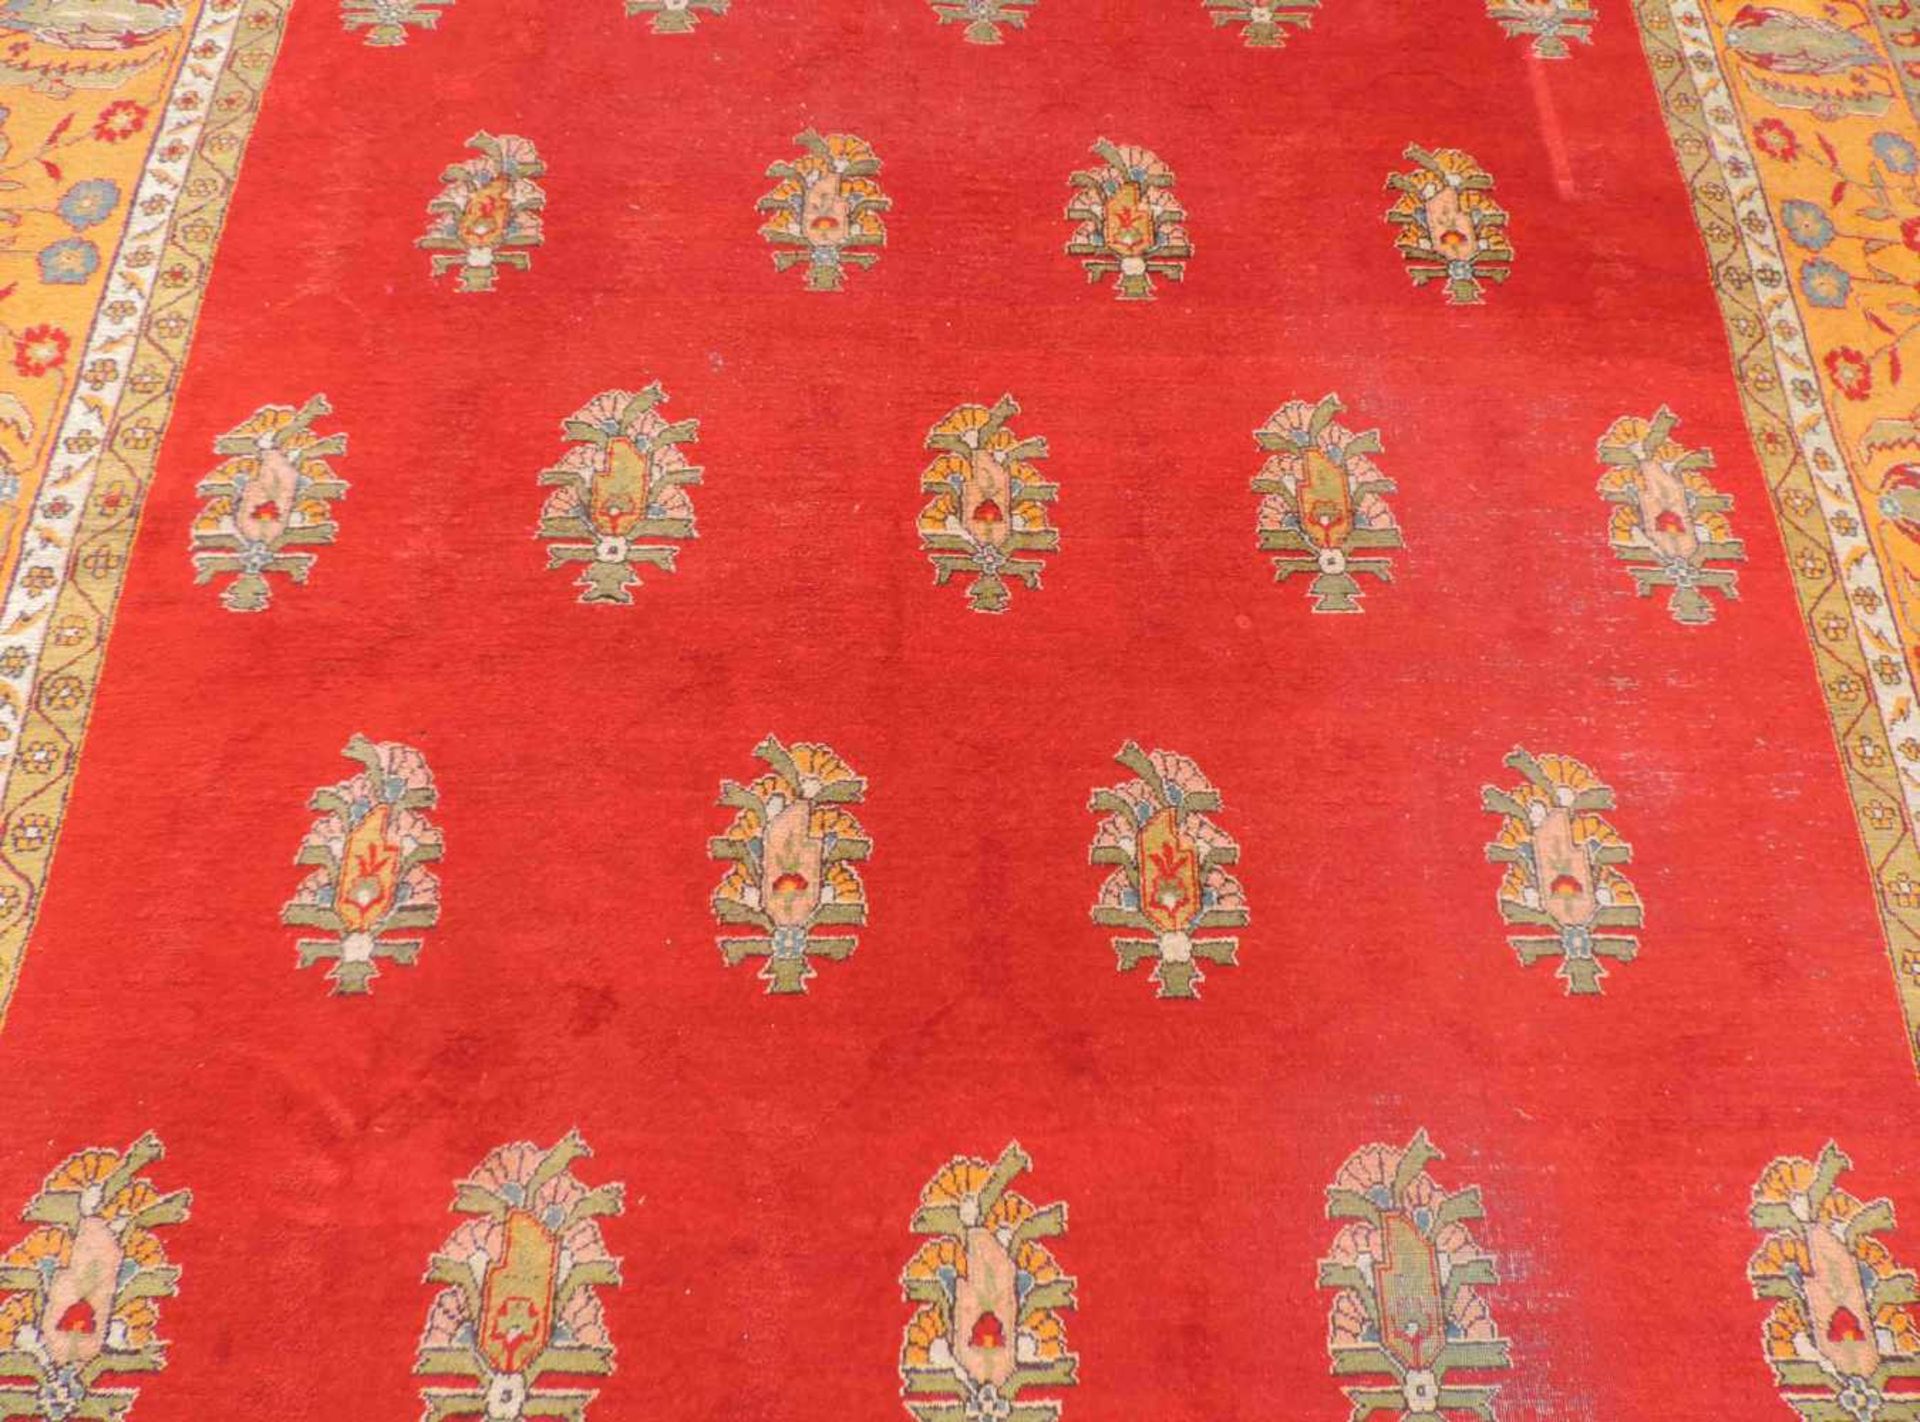 Mughal carpet. Deccani, India around 1800. - Image 5 of 10